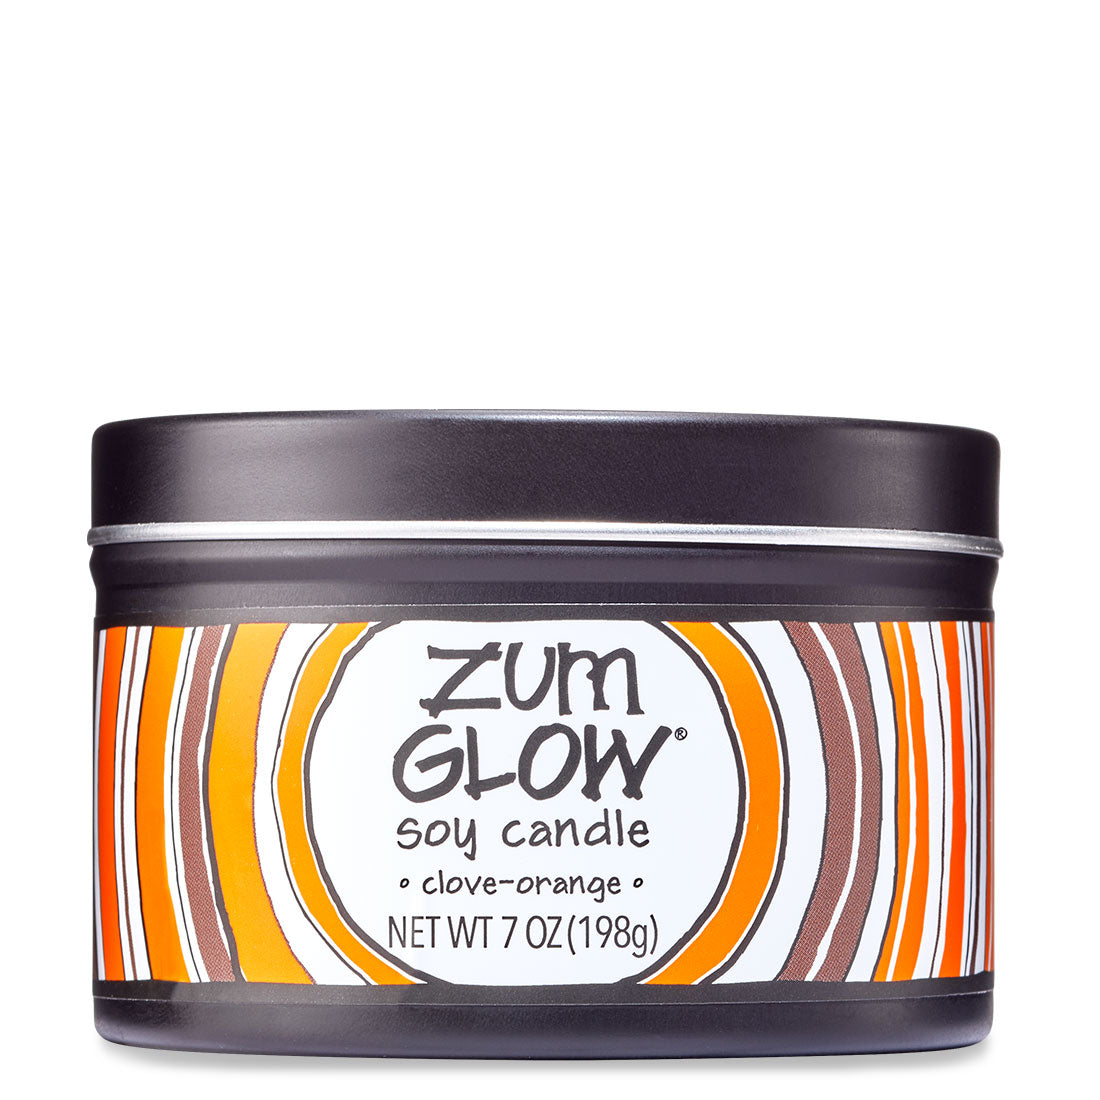 Clove-Orange scented candle in a black tin.